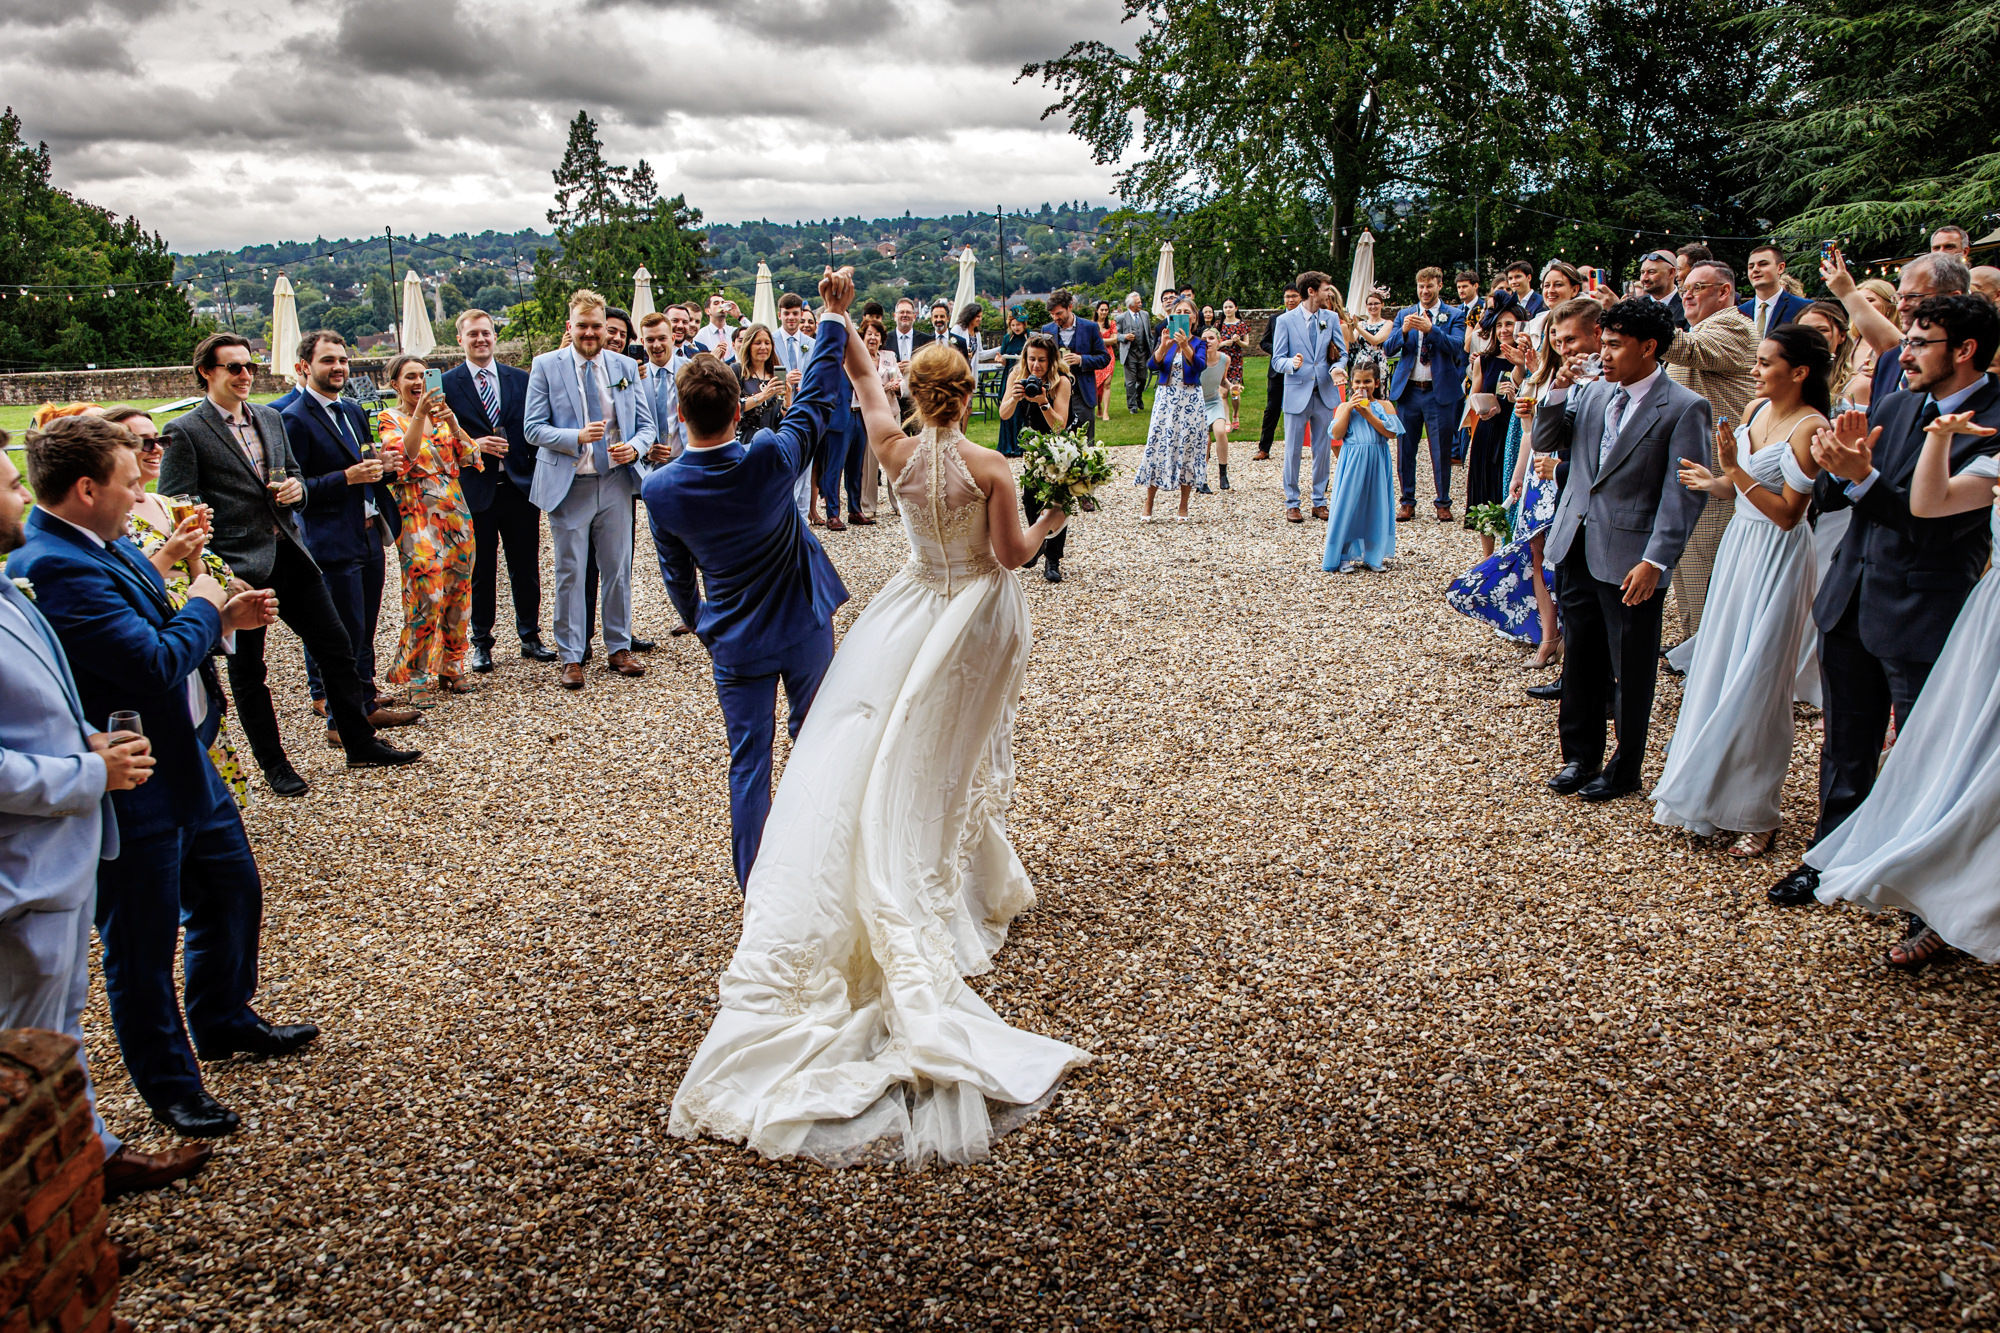 Large weddings at Farnham Castle in Surrey